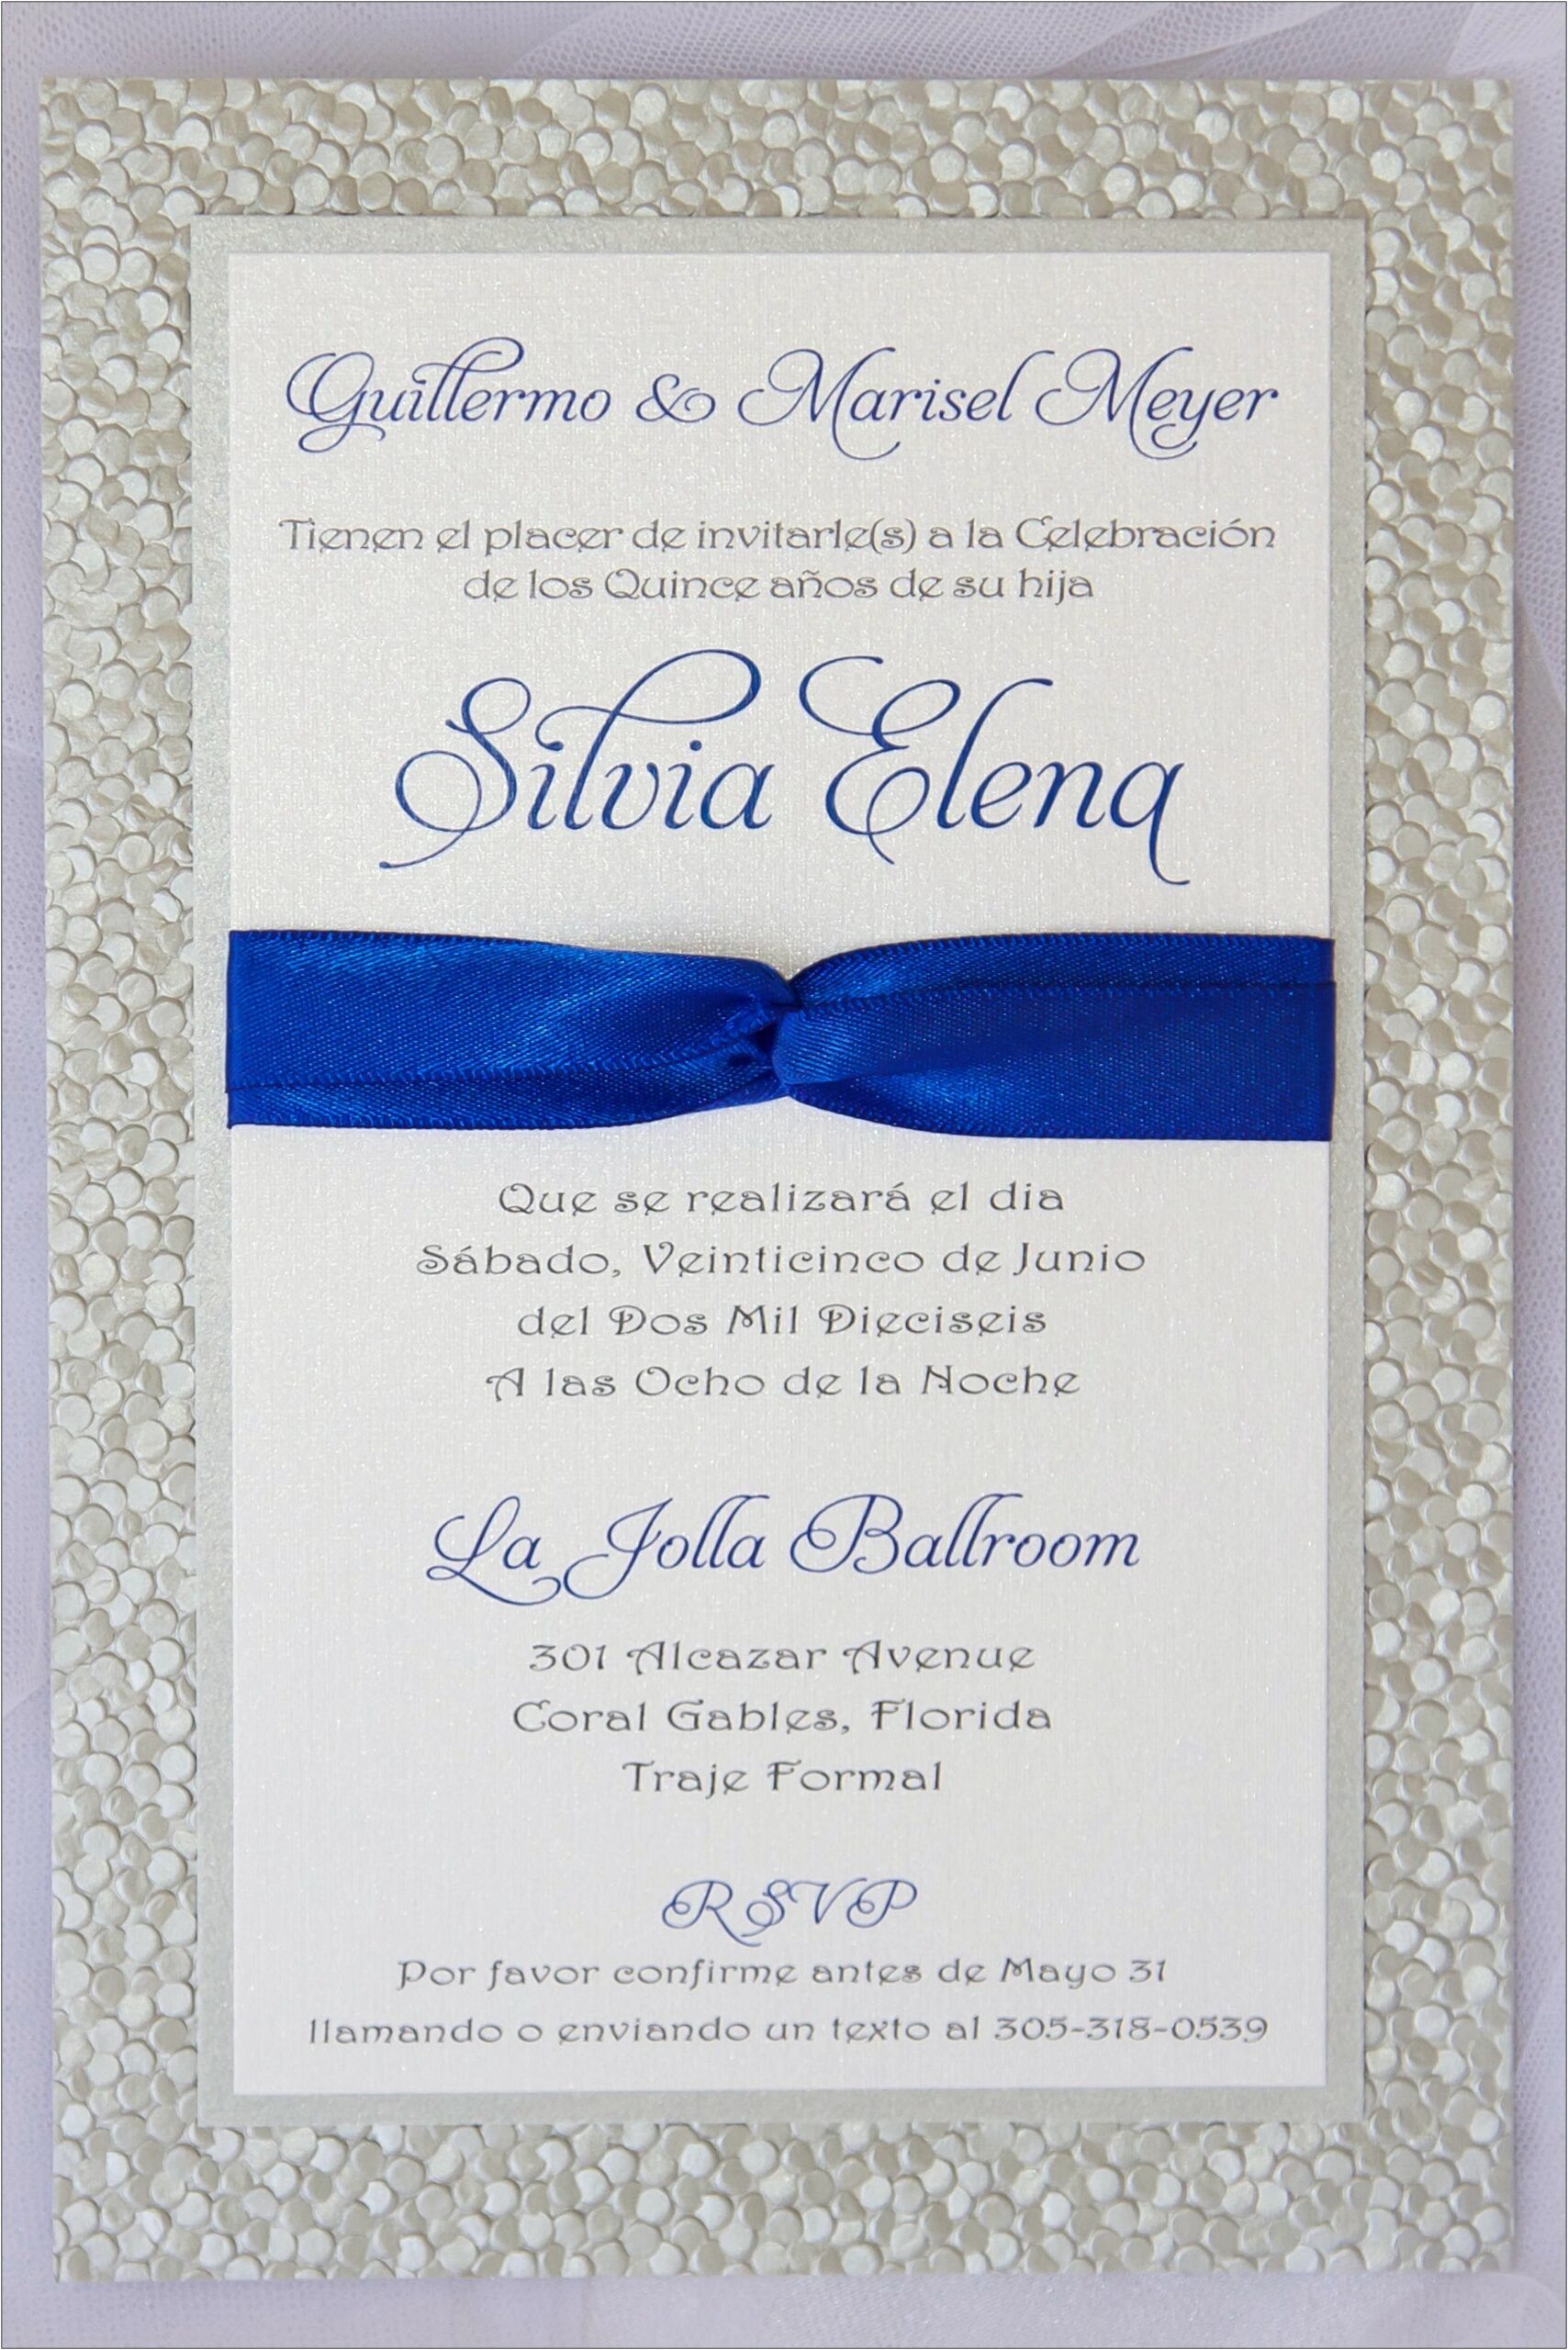 Lilian Designs Wedding Invitations Coral Gables Fl